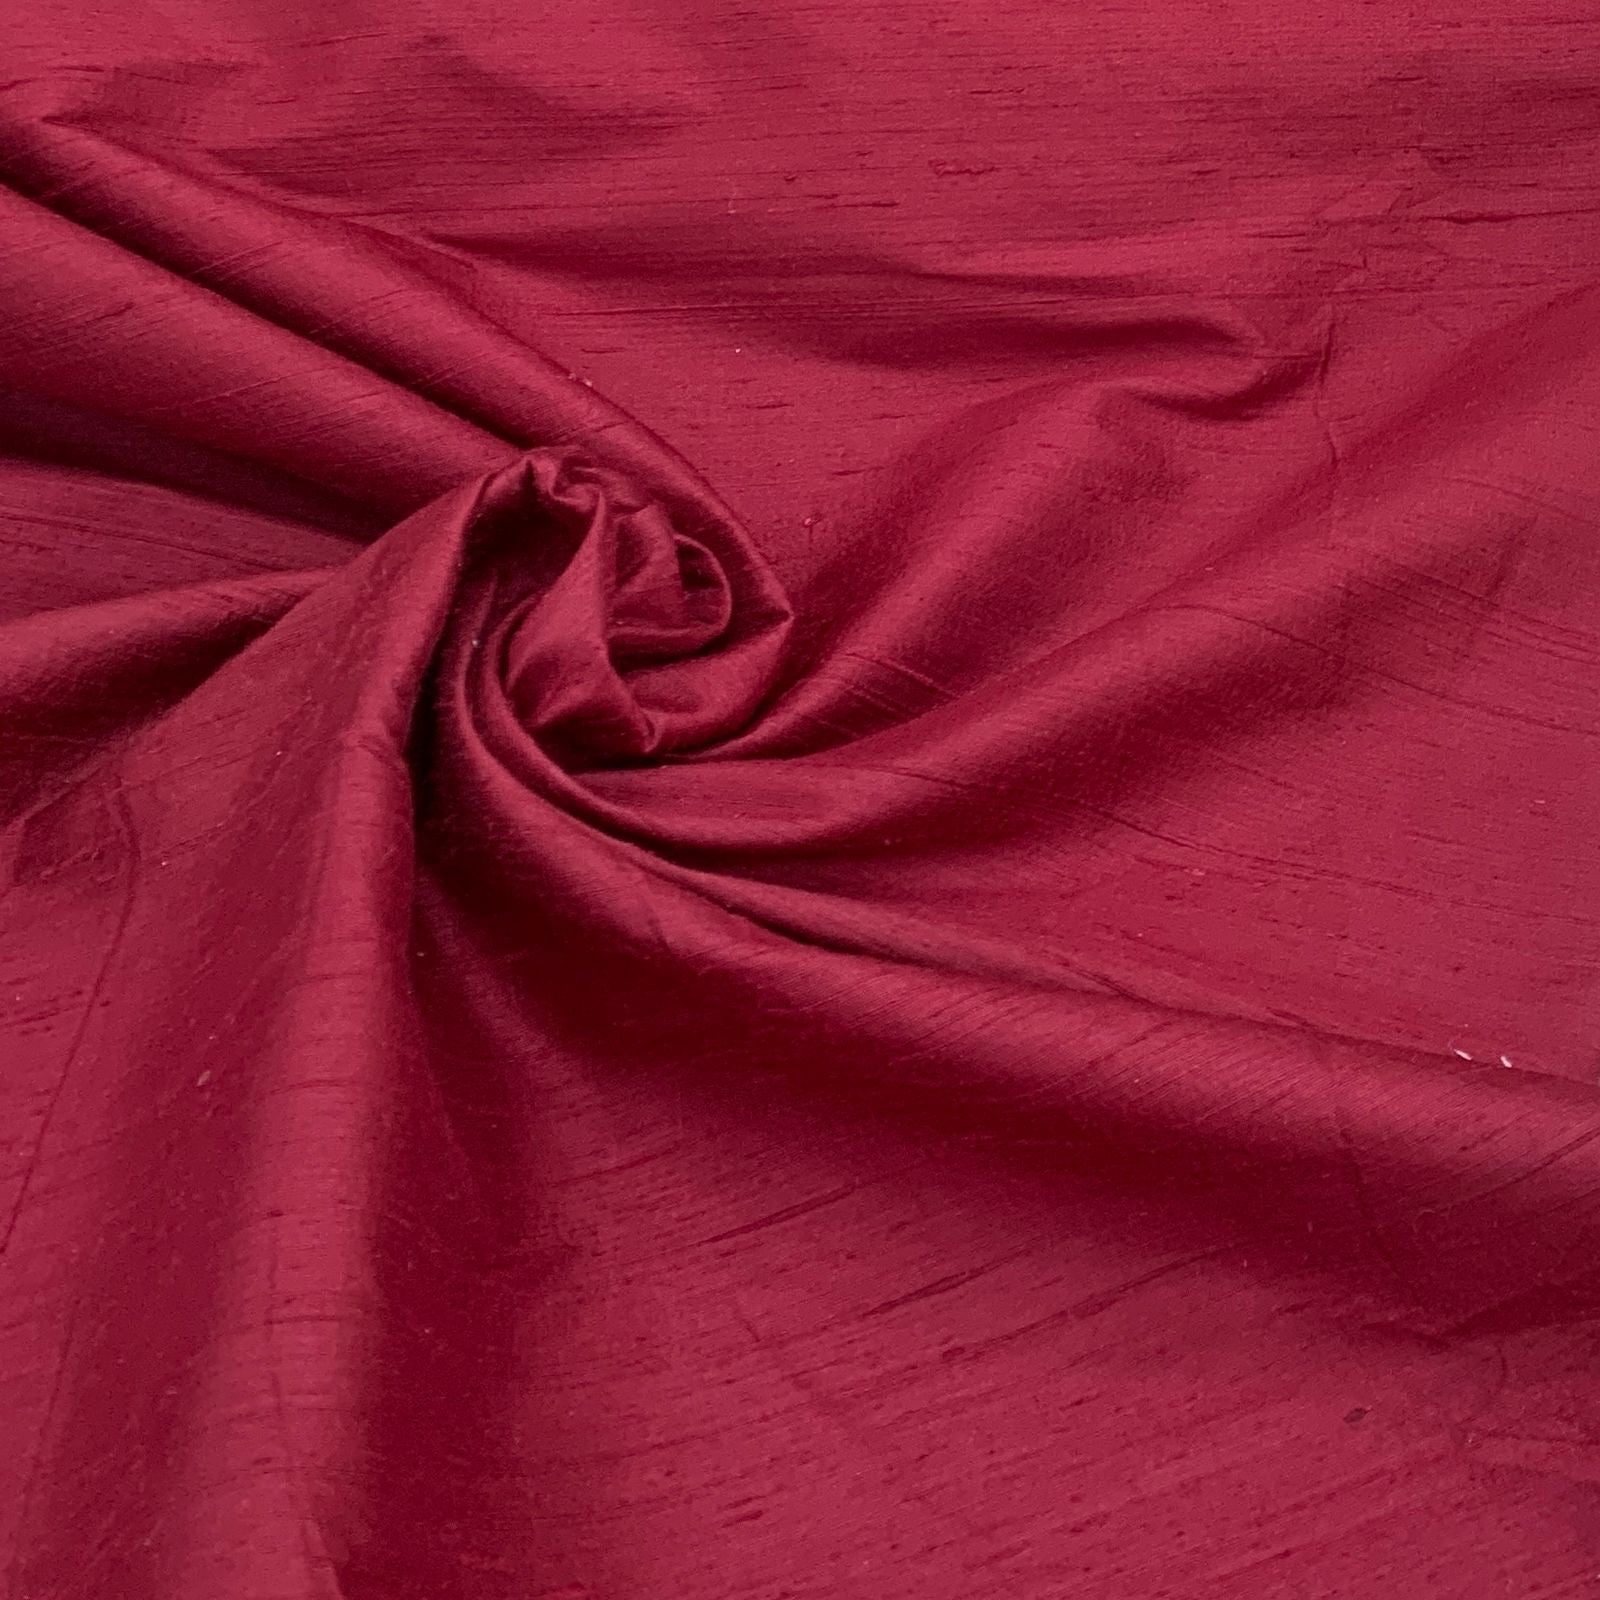 Maroon Plain Woven Rayon Fabric